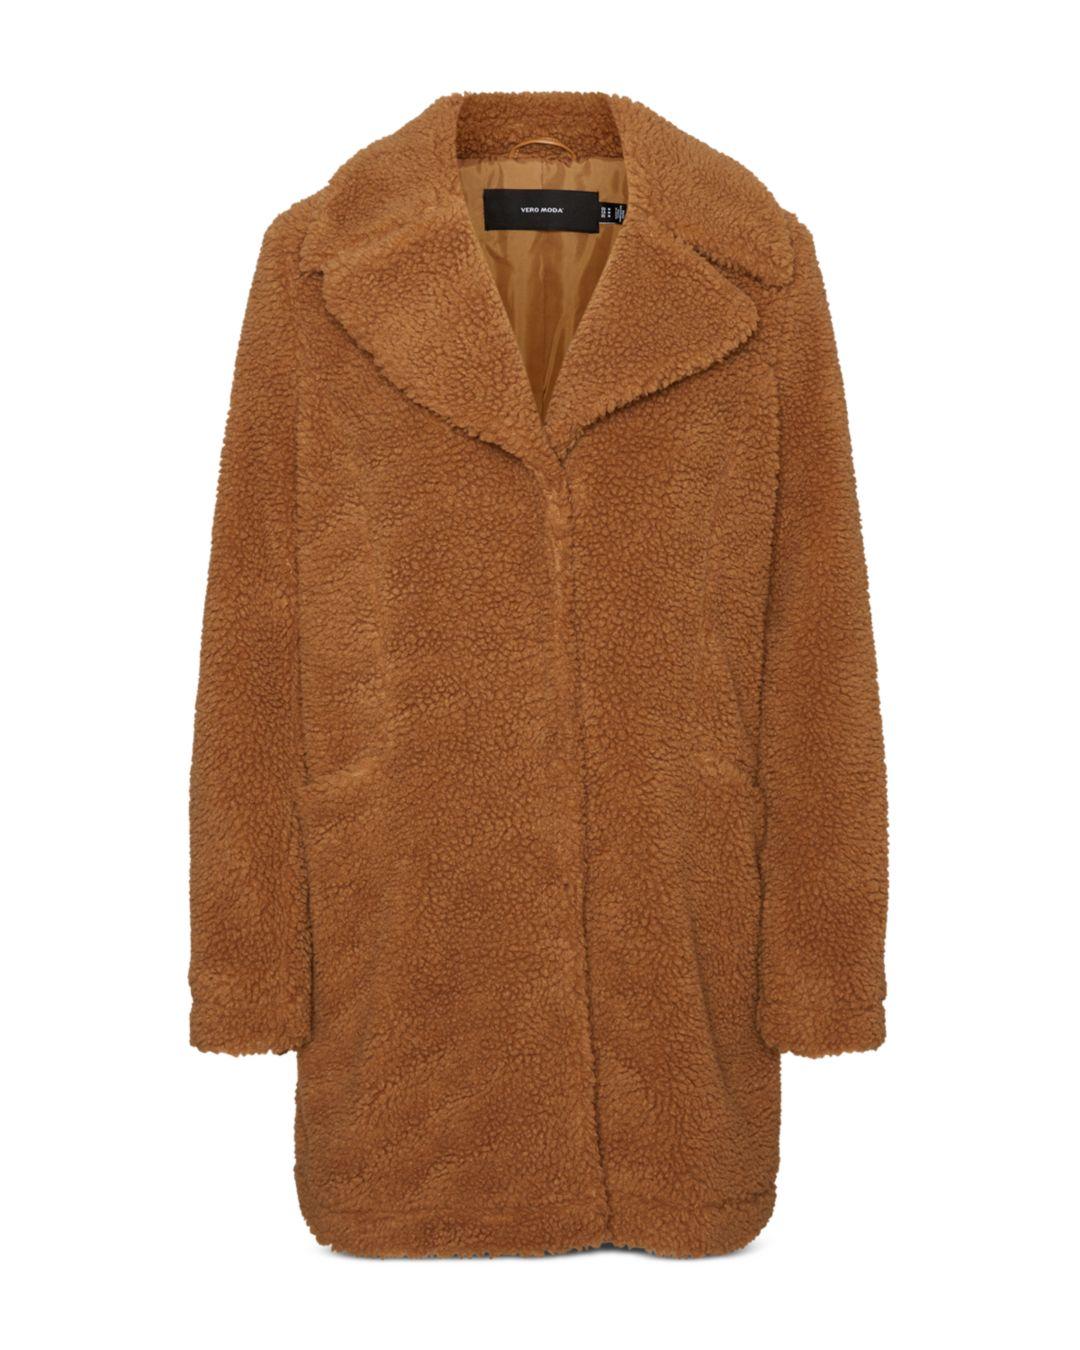 Vero Moda Faux Fur Teddy Coat in Tobacco Brown (Brown) - Lyst